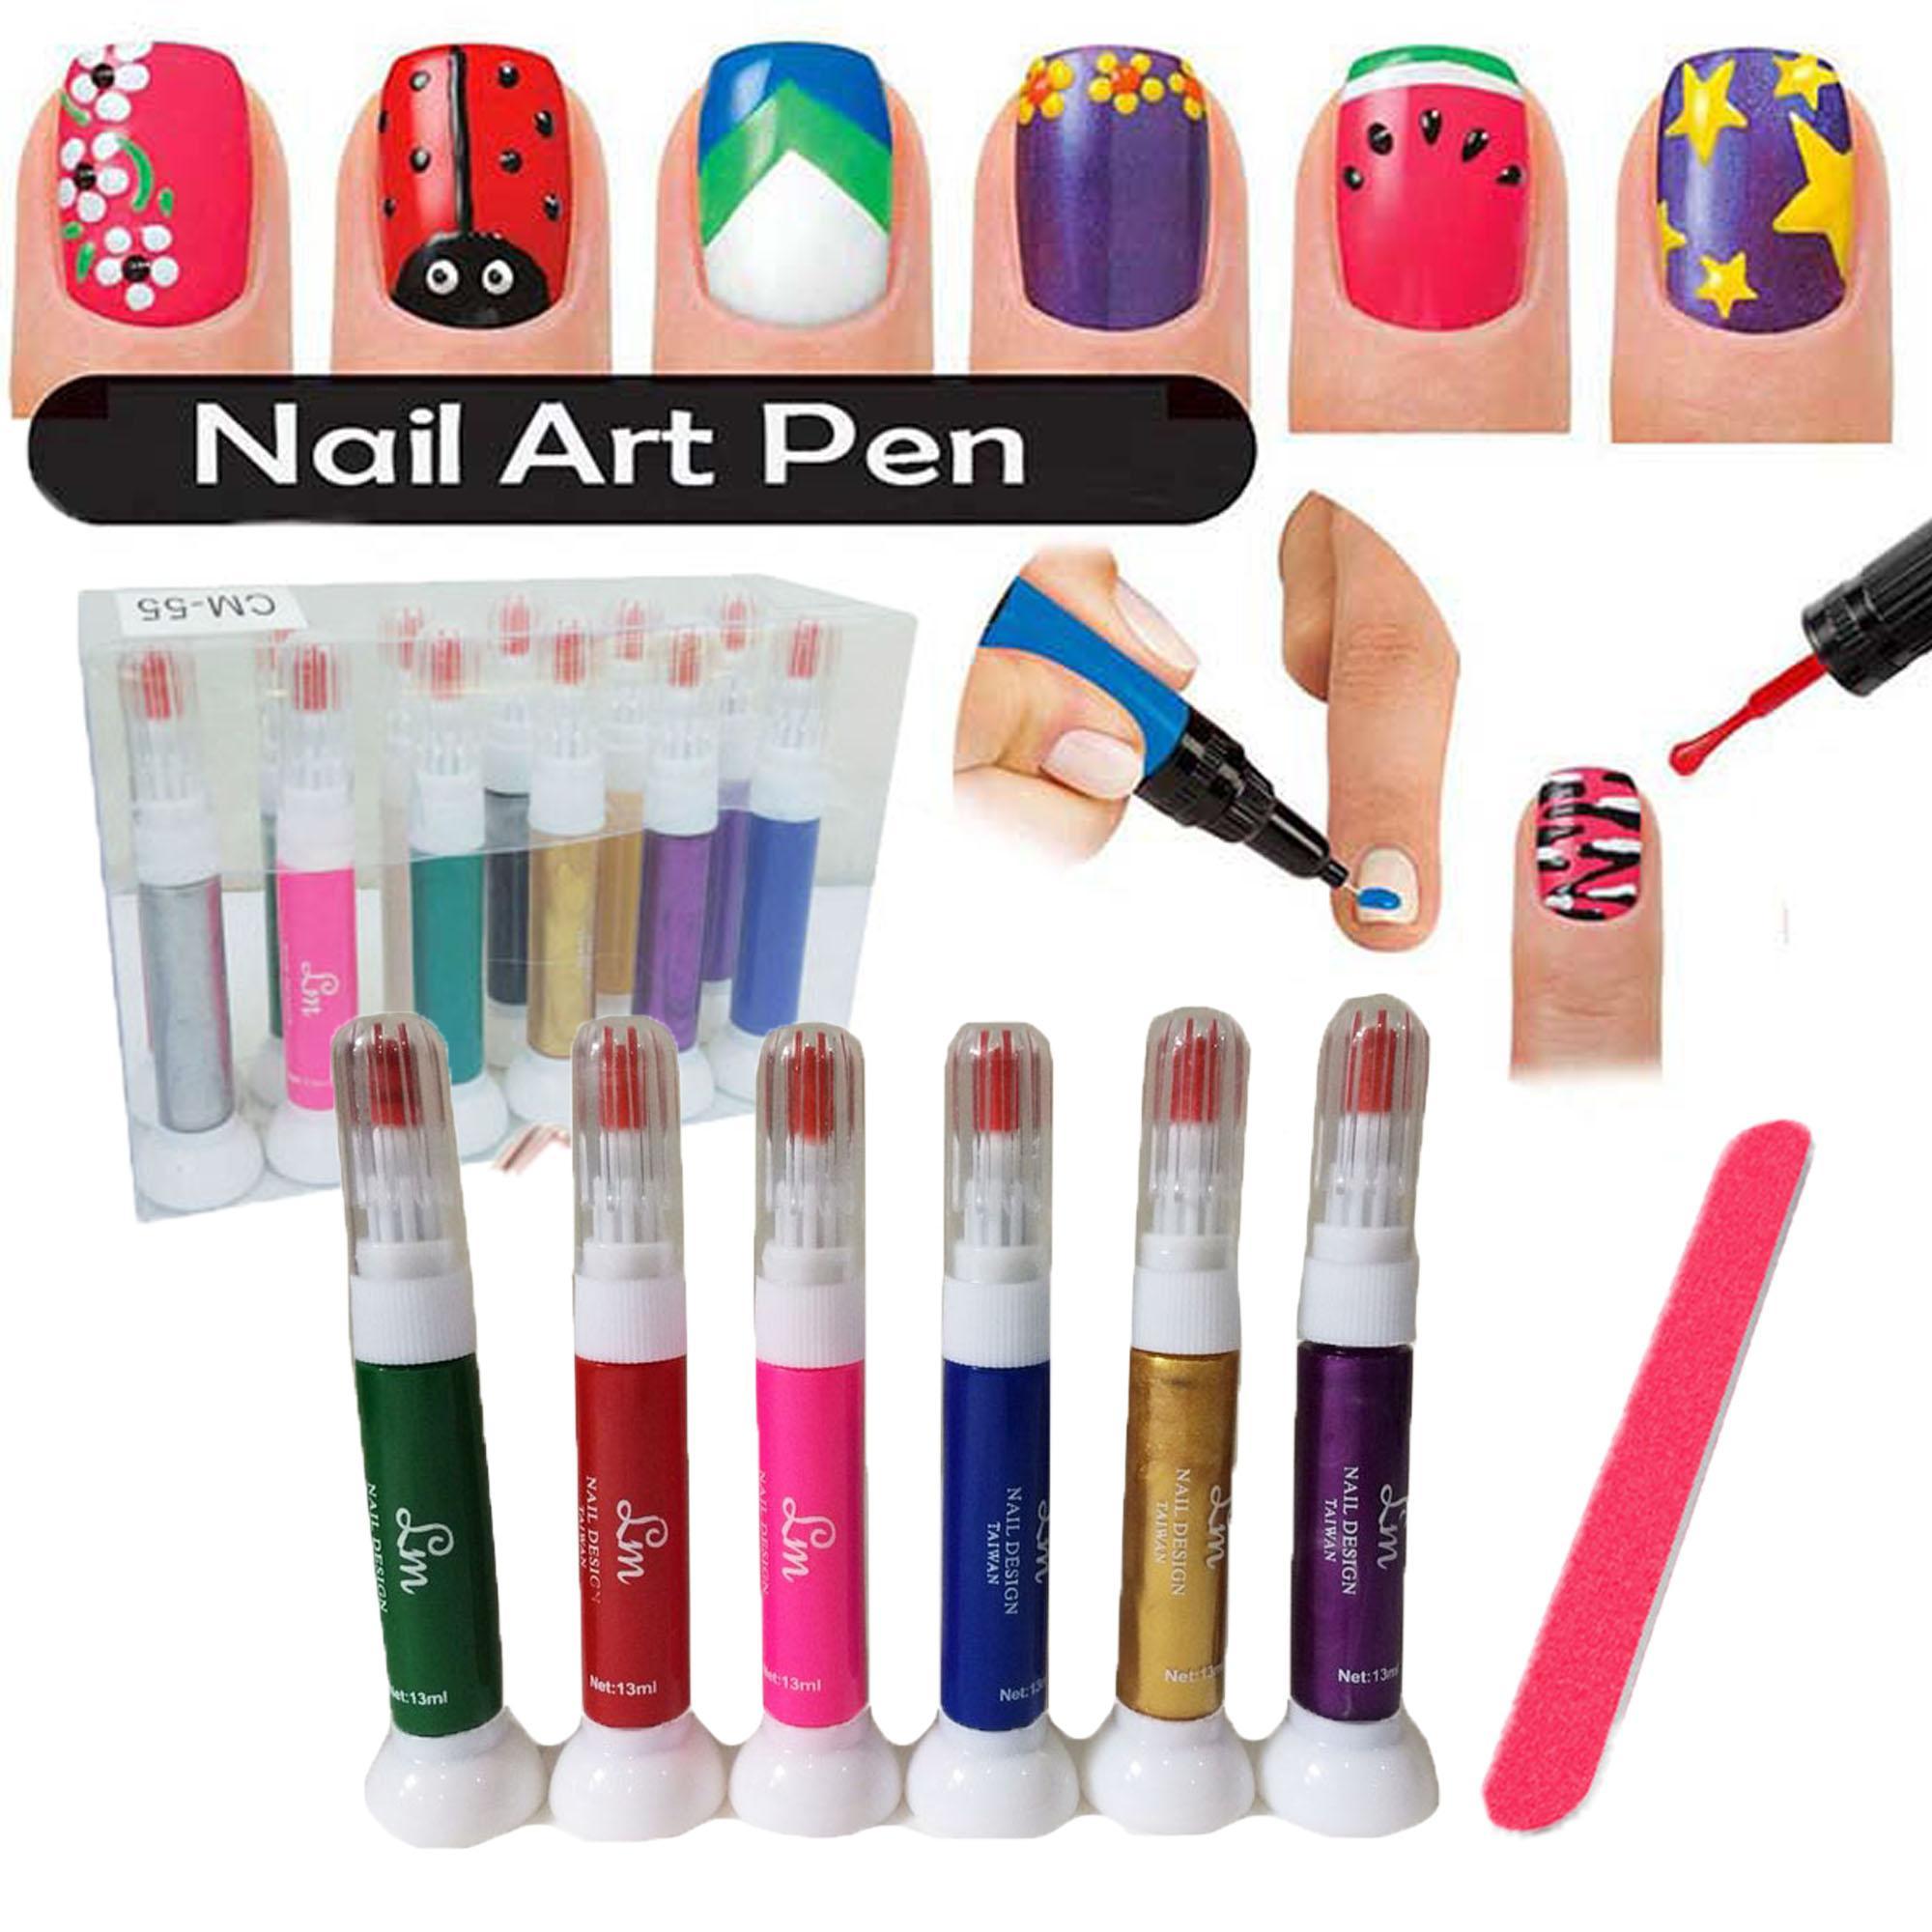 6 Colors 2-in-1 Brush and Art Pen Set Nail Art Pen for 3D Nail Art DIY  Decoration Nail Polish Pen Set FREE Nail File 227g | Lazada PH